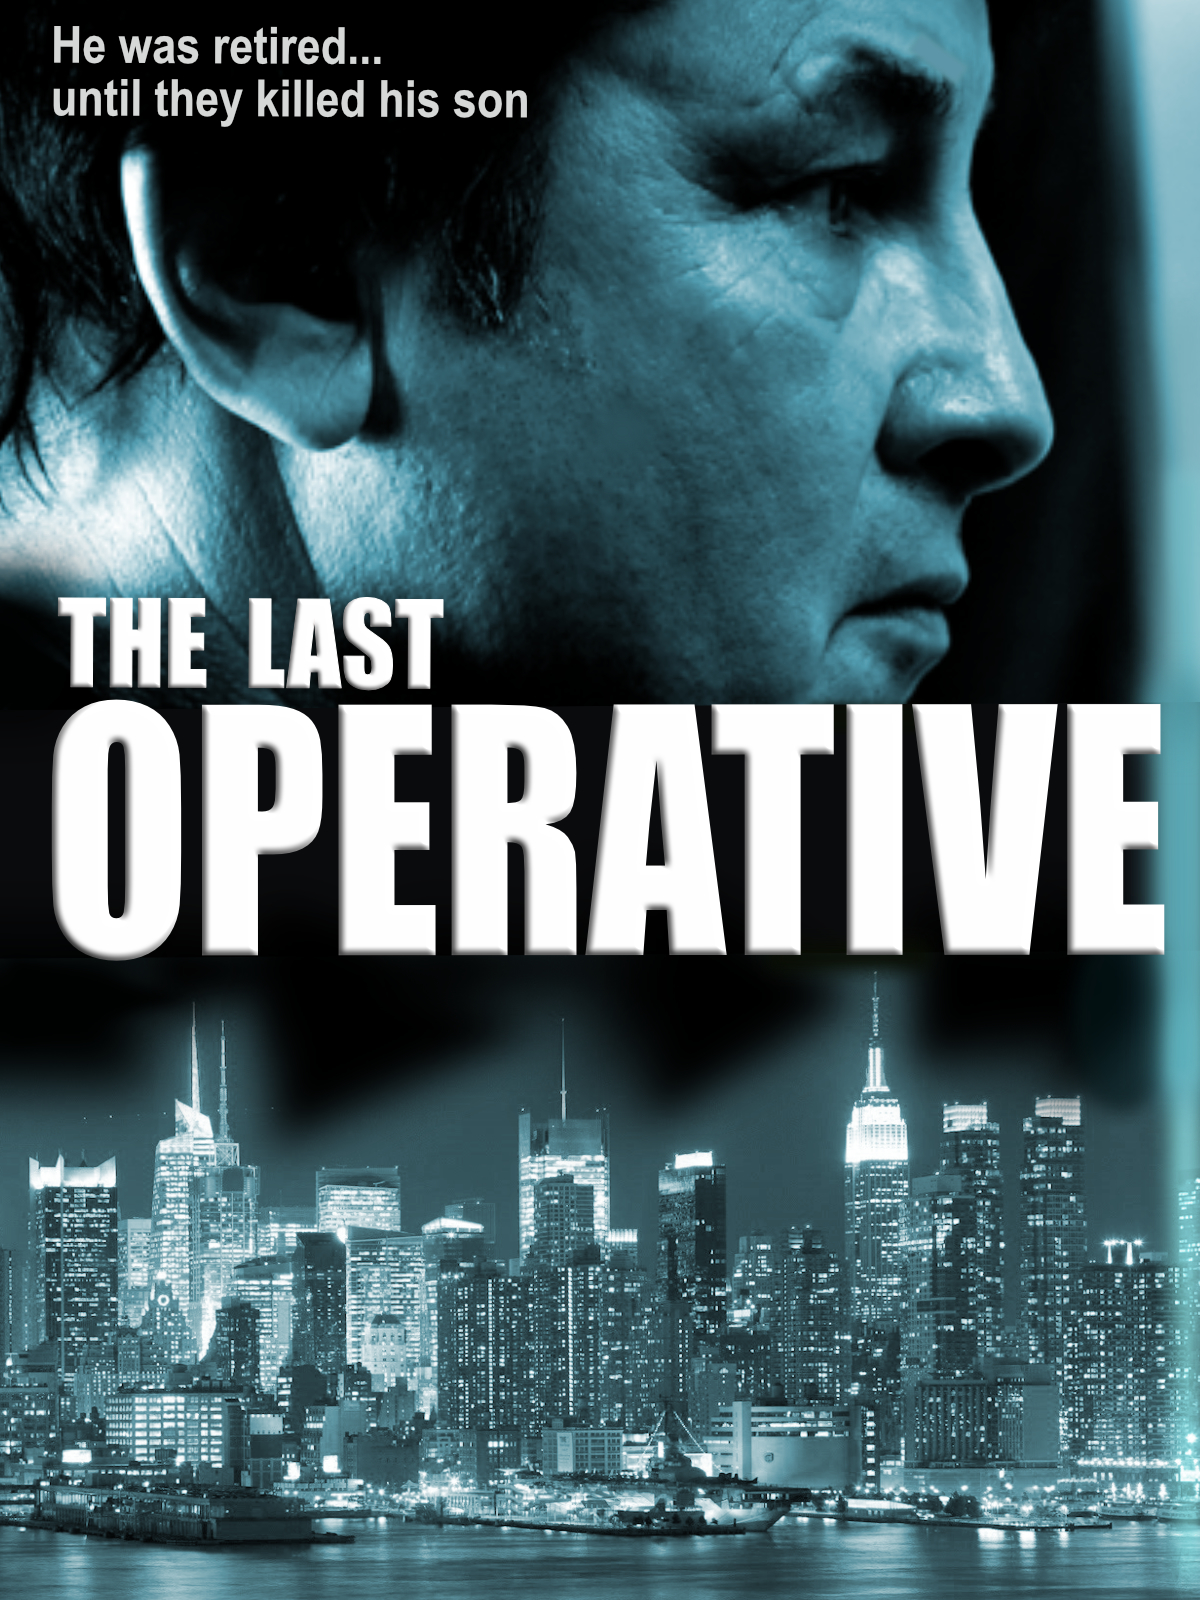 The Last Operative